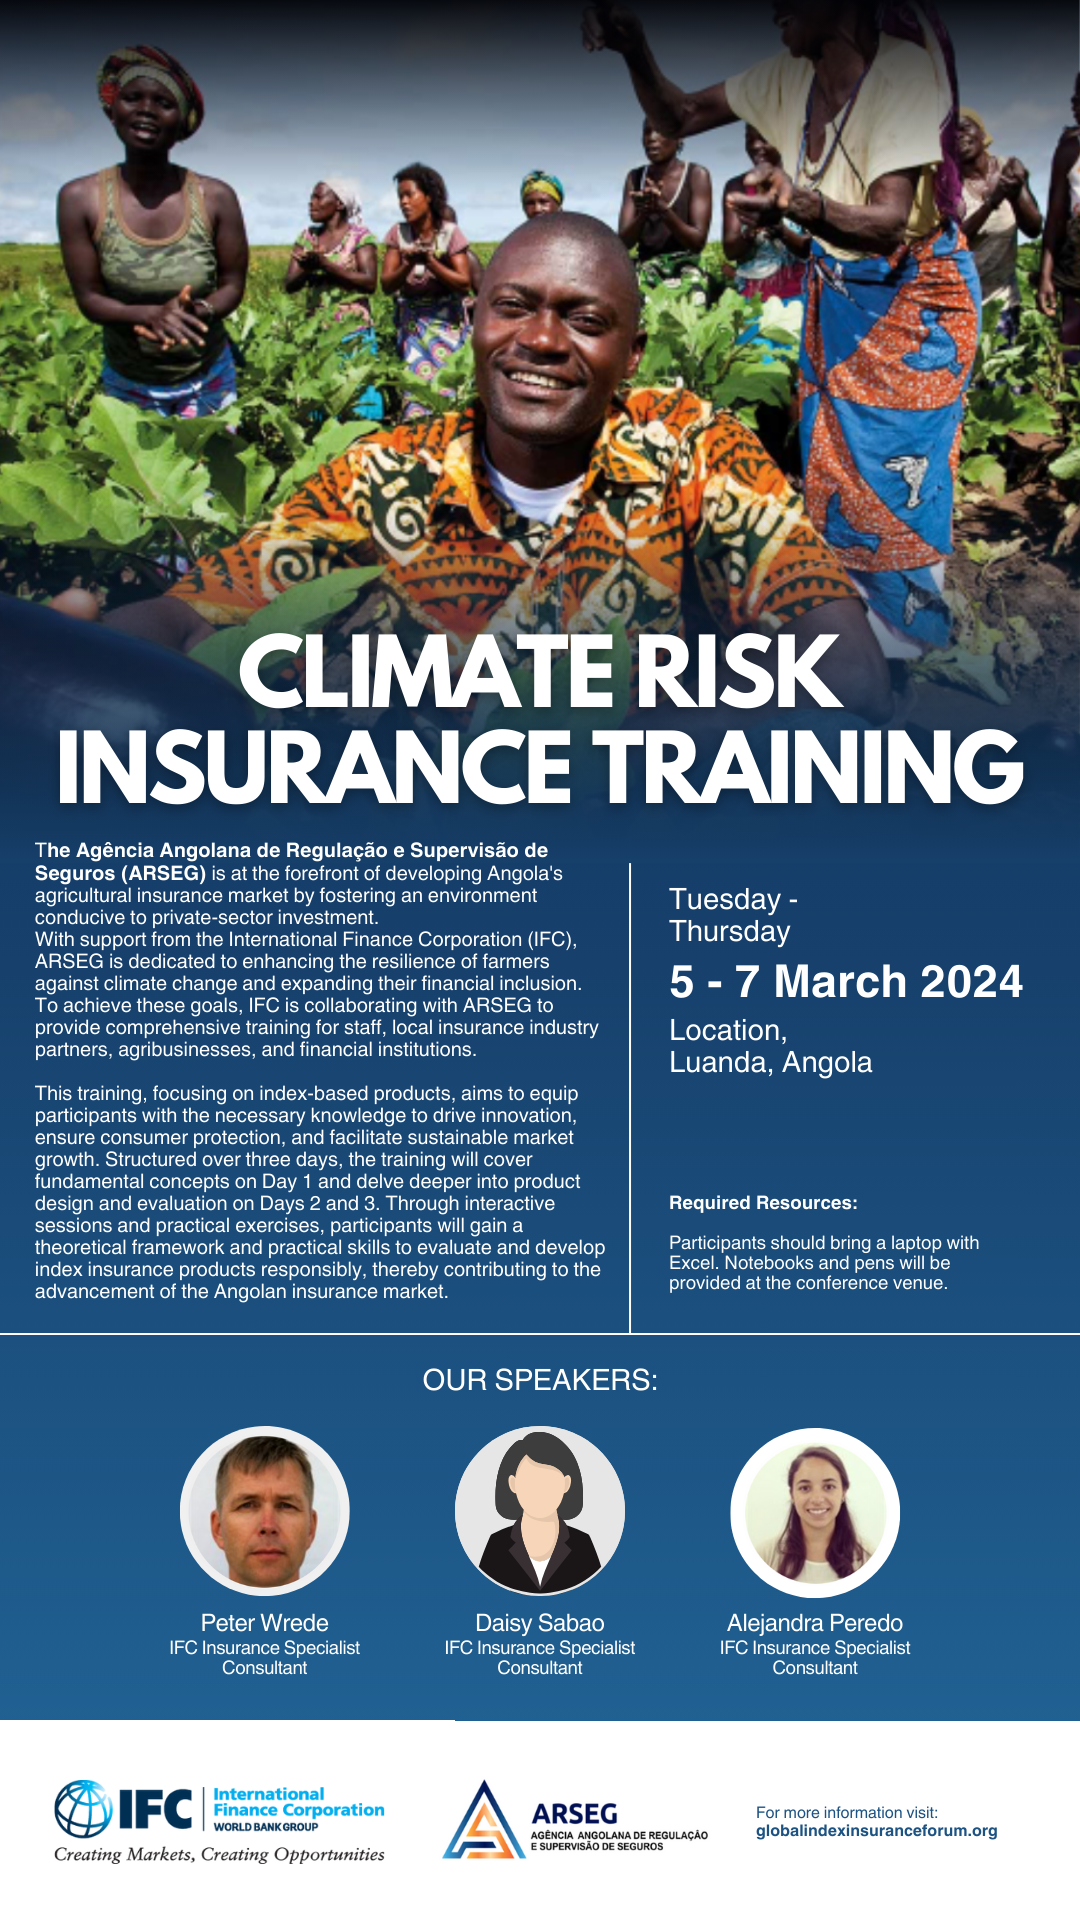 Climate Risk Insurance Training in Luanda, Angola